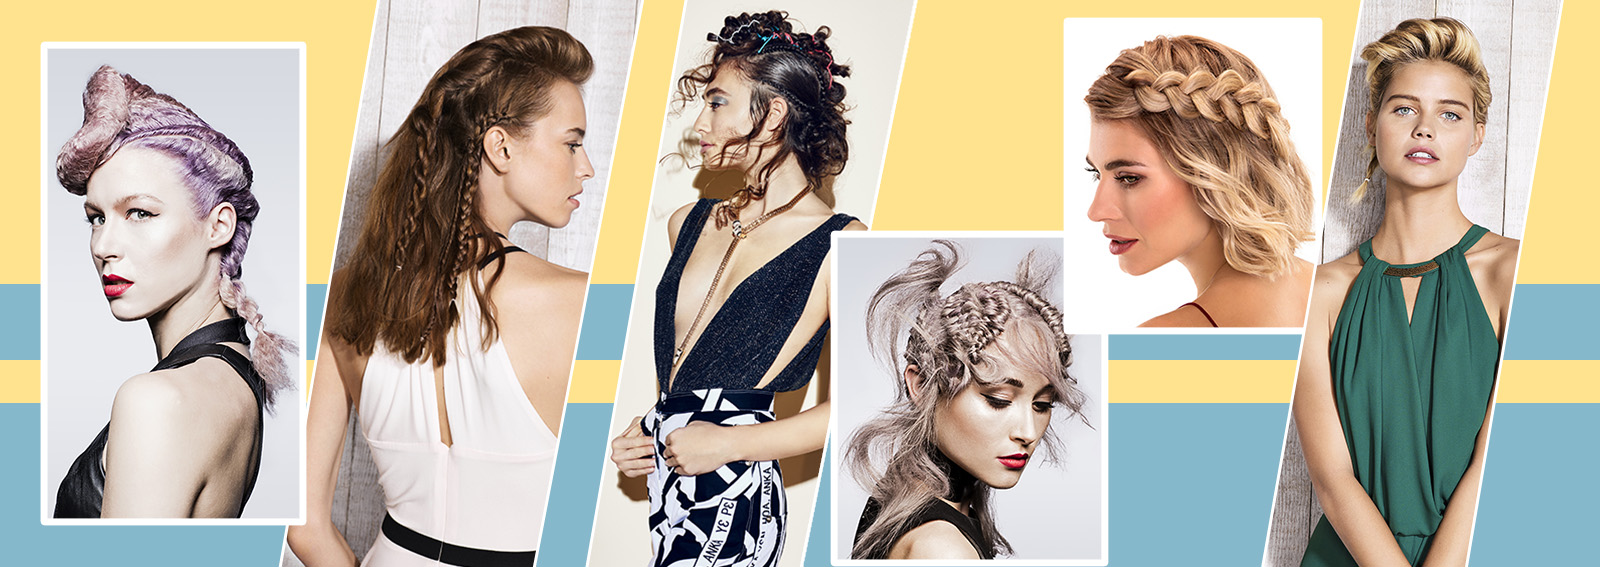 acconciature capelli saloni primavera estate 2017 collage_desktop